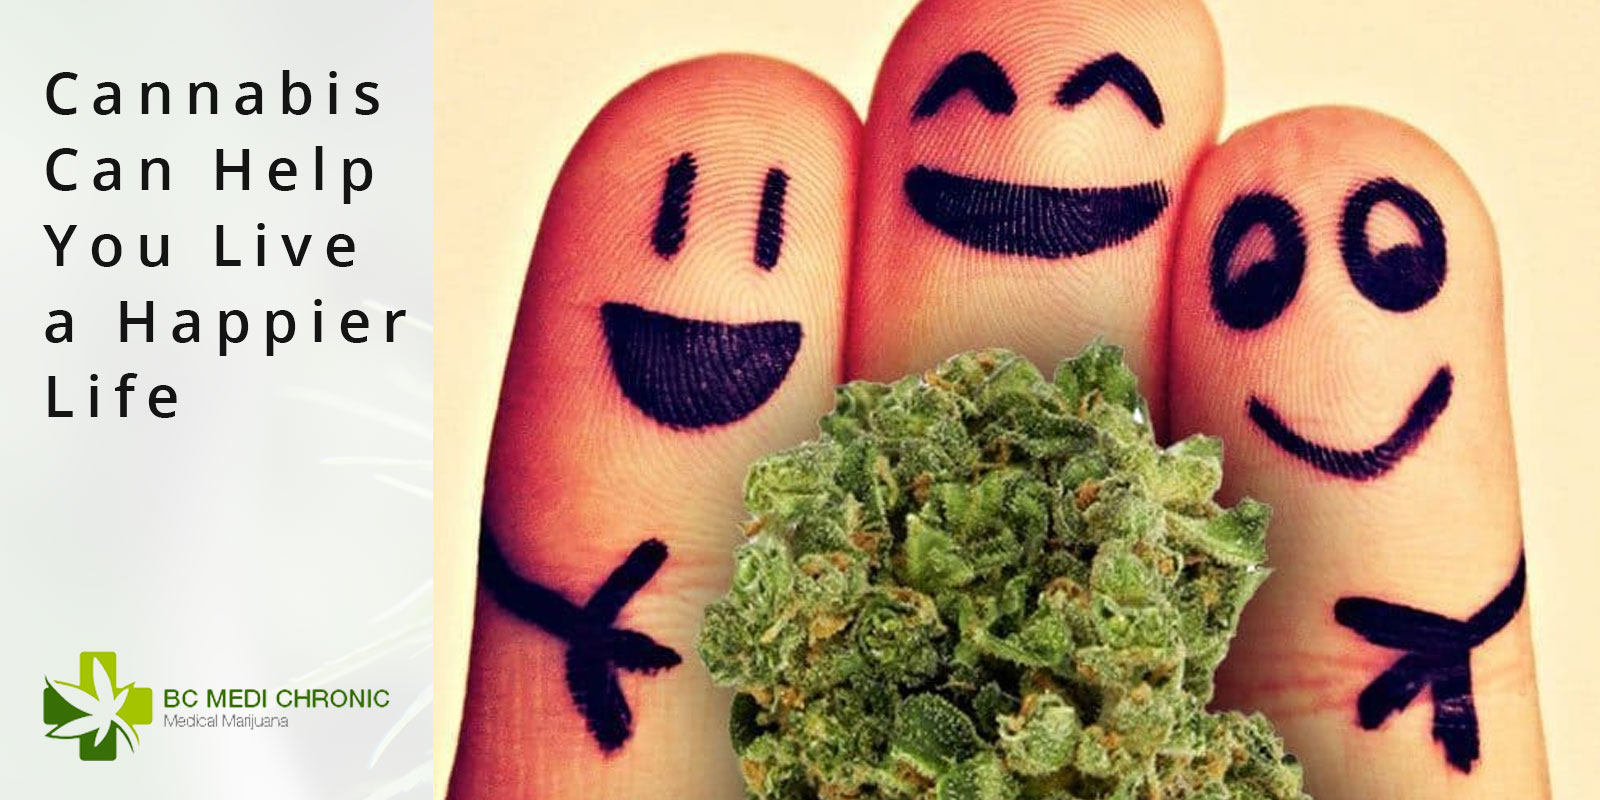 smoking cannabis makes u happy